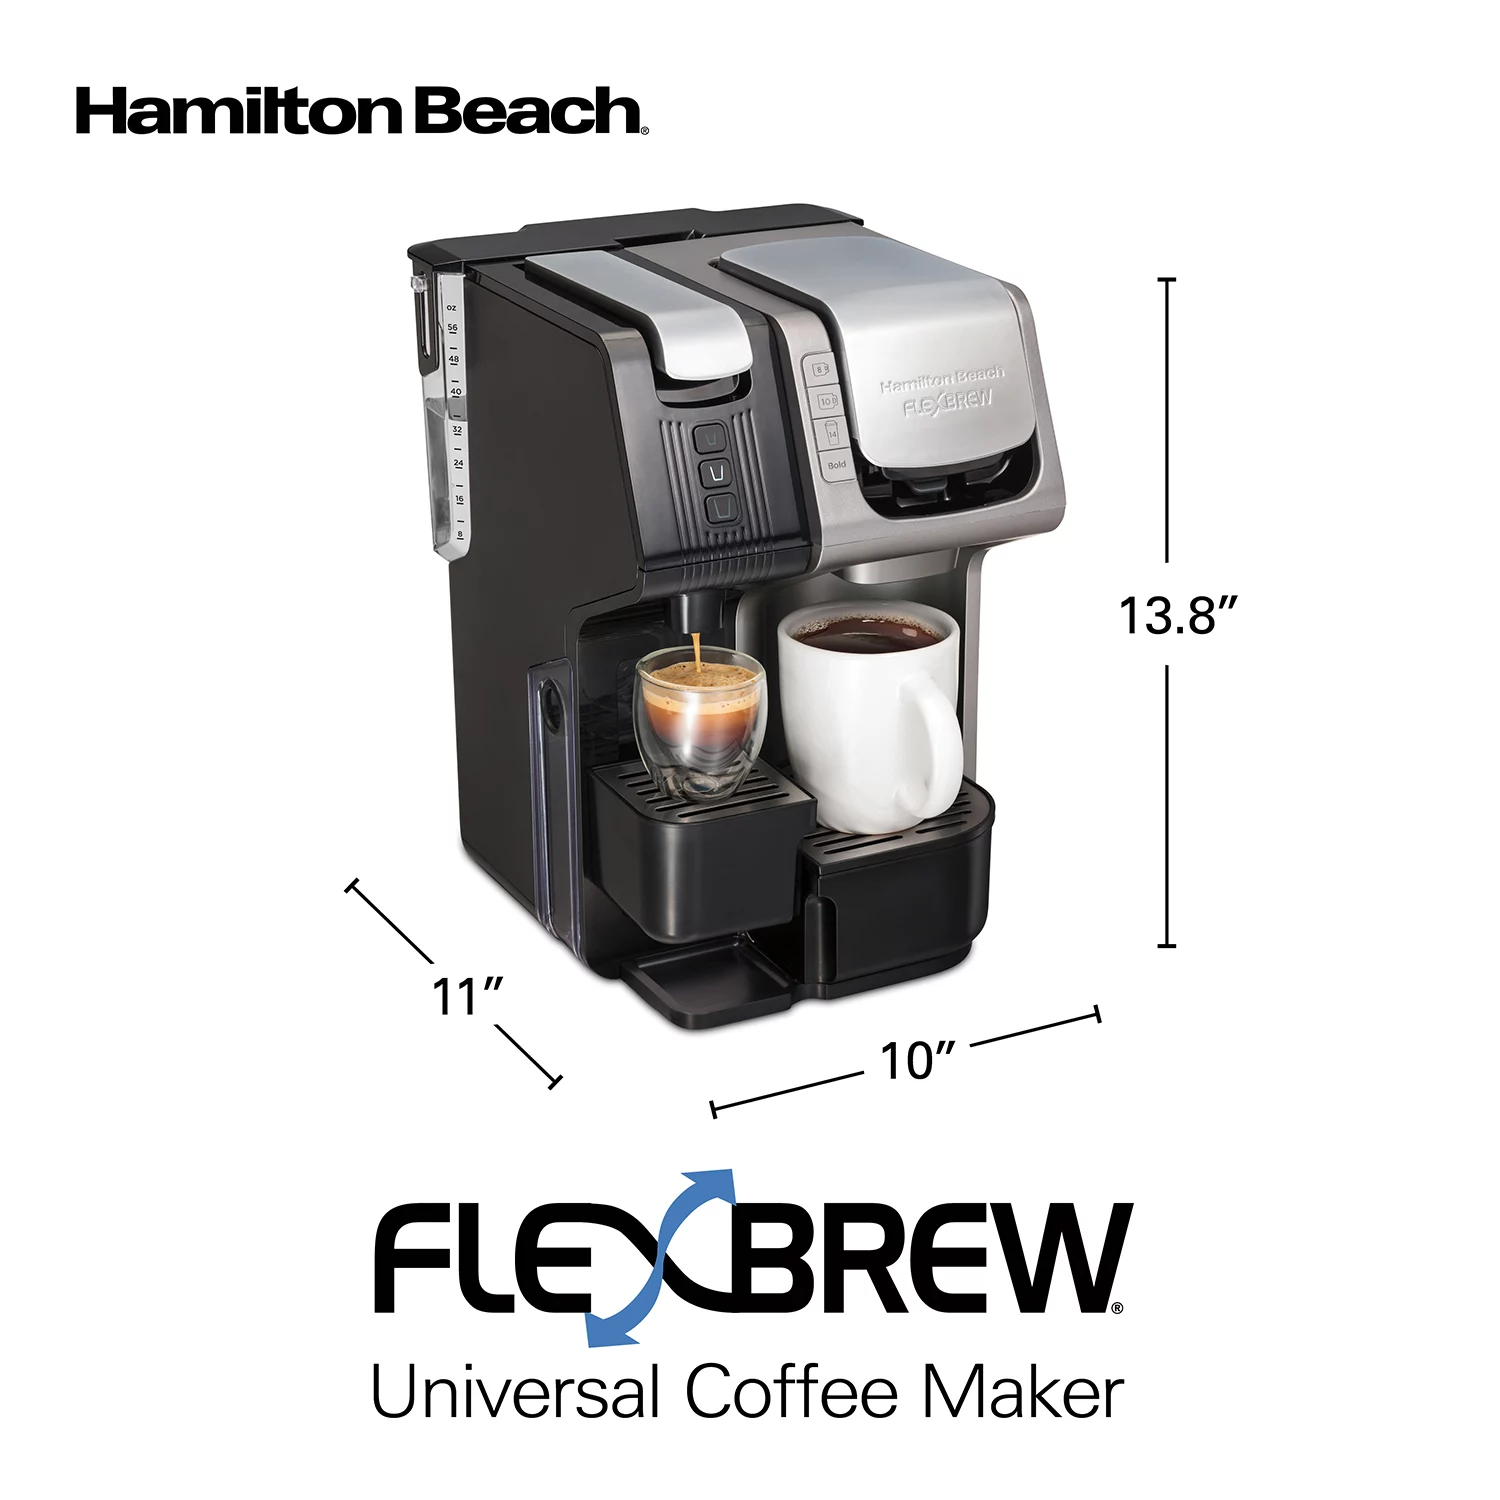 Cafe Au Lait Iced Coffee and Hamilton Beach 2-Way FlexBrew